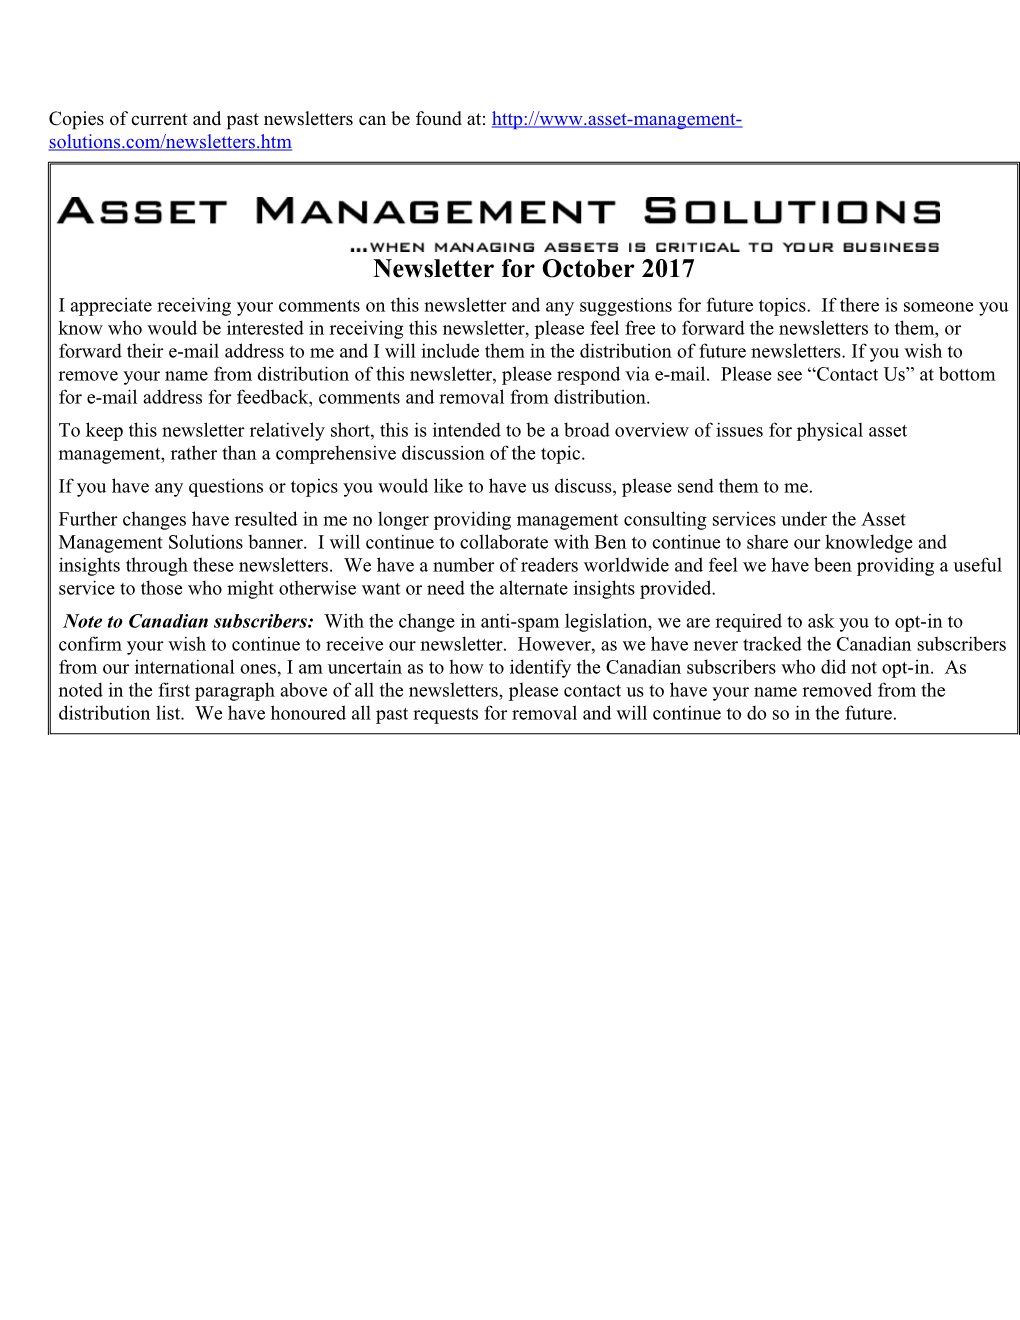 Asset Management Solutions Newsletter for October 2017